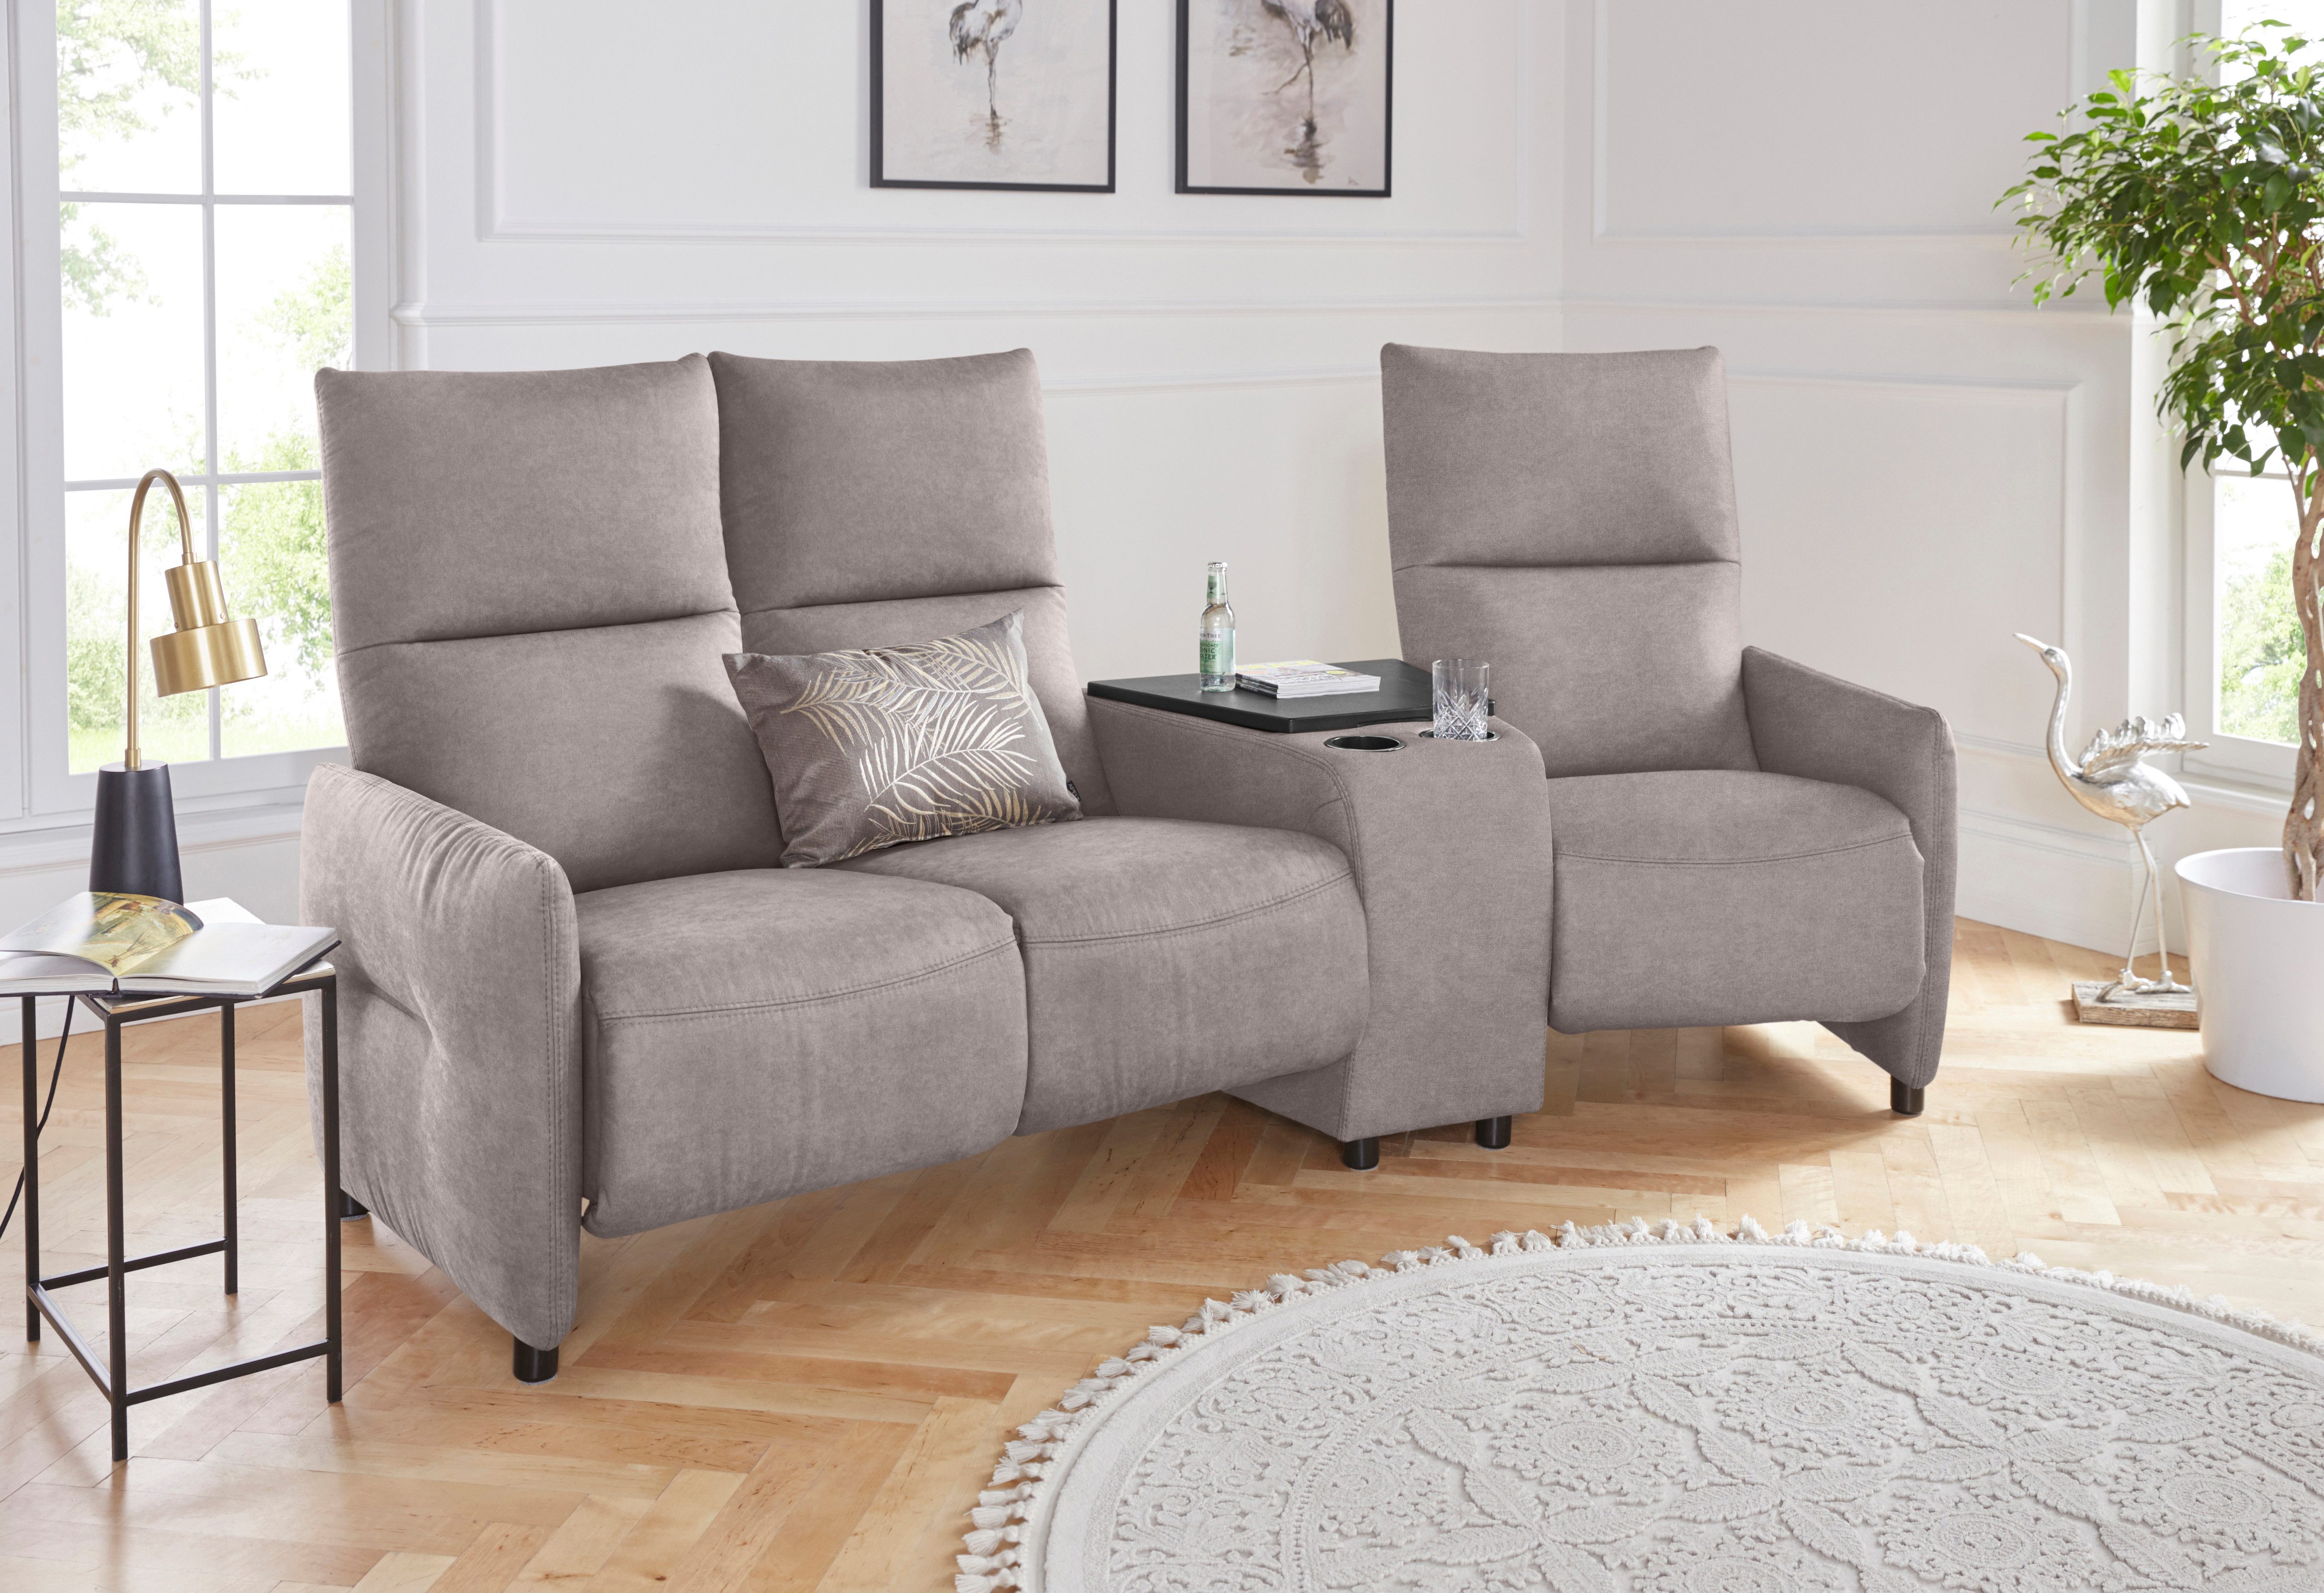 exxpo - sofa fashion 3-zitsbank Inclusief relaxfunctie en vak